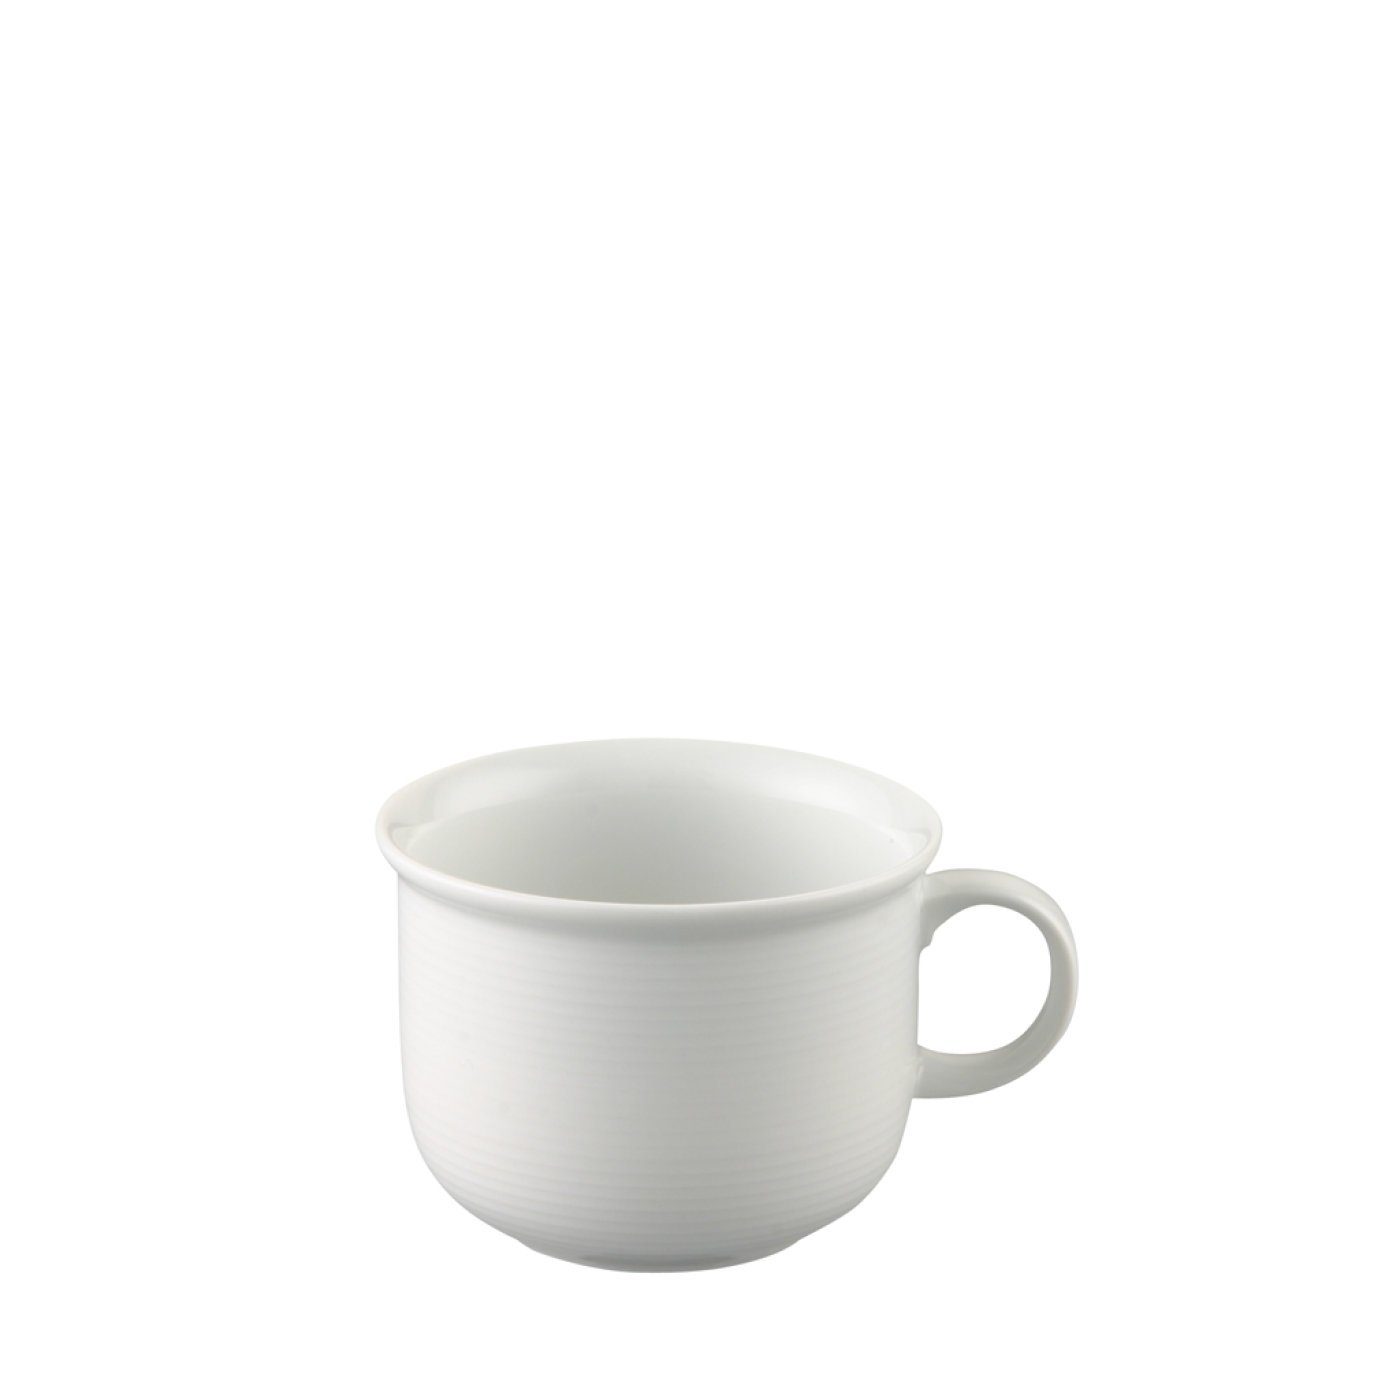 Stück, Porzellan, TREND Weiß mikrowellengeeignet - Porzellan - Tasse 6 Thomas spülmaschinenfest und Porzellan, Kaffee-Obertasse